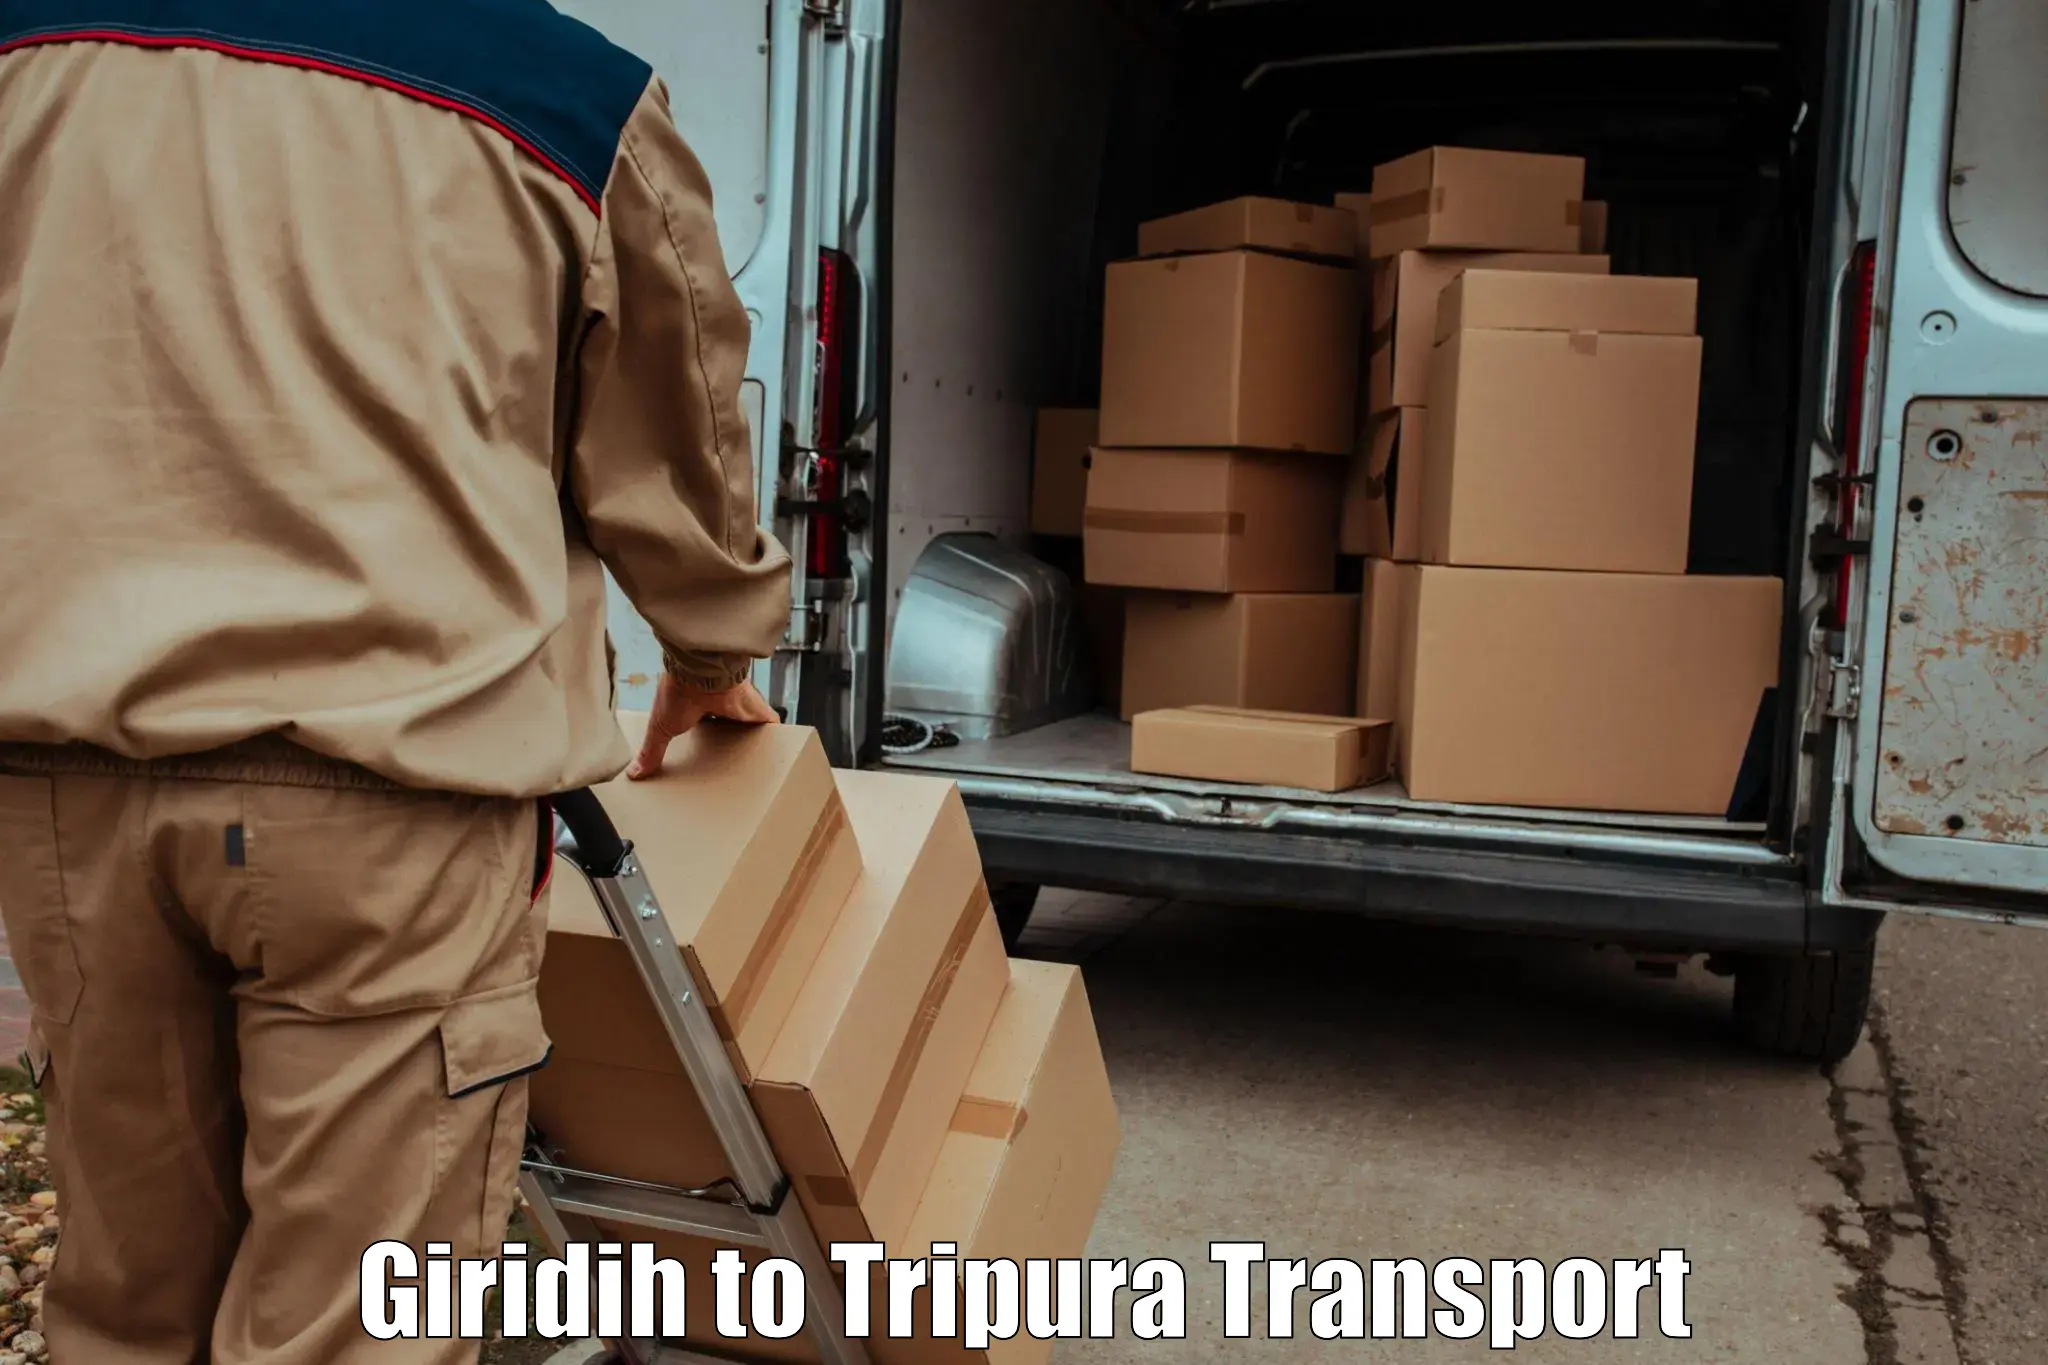 Air freight transport services Giridih to Udaipur Tripura